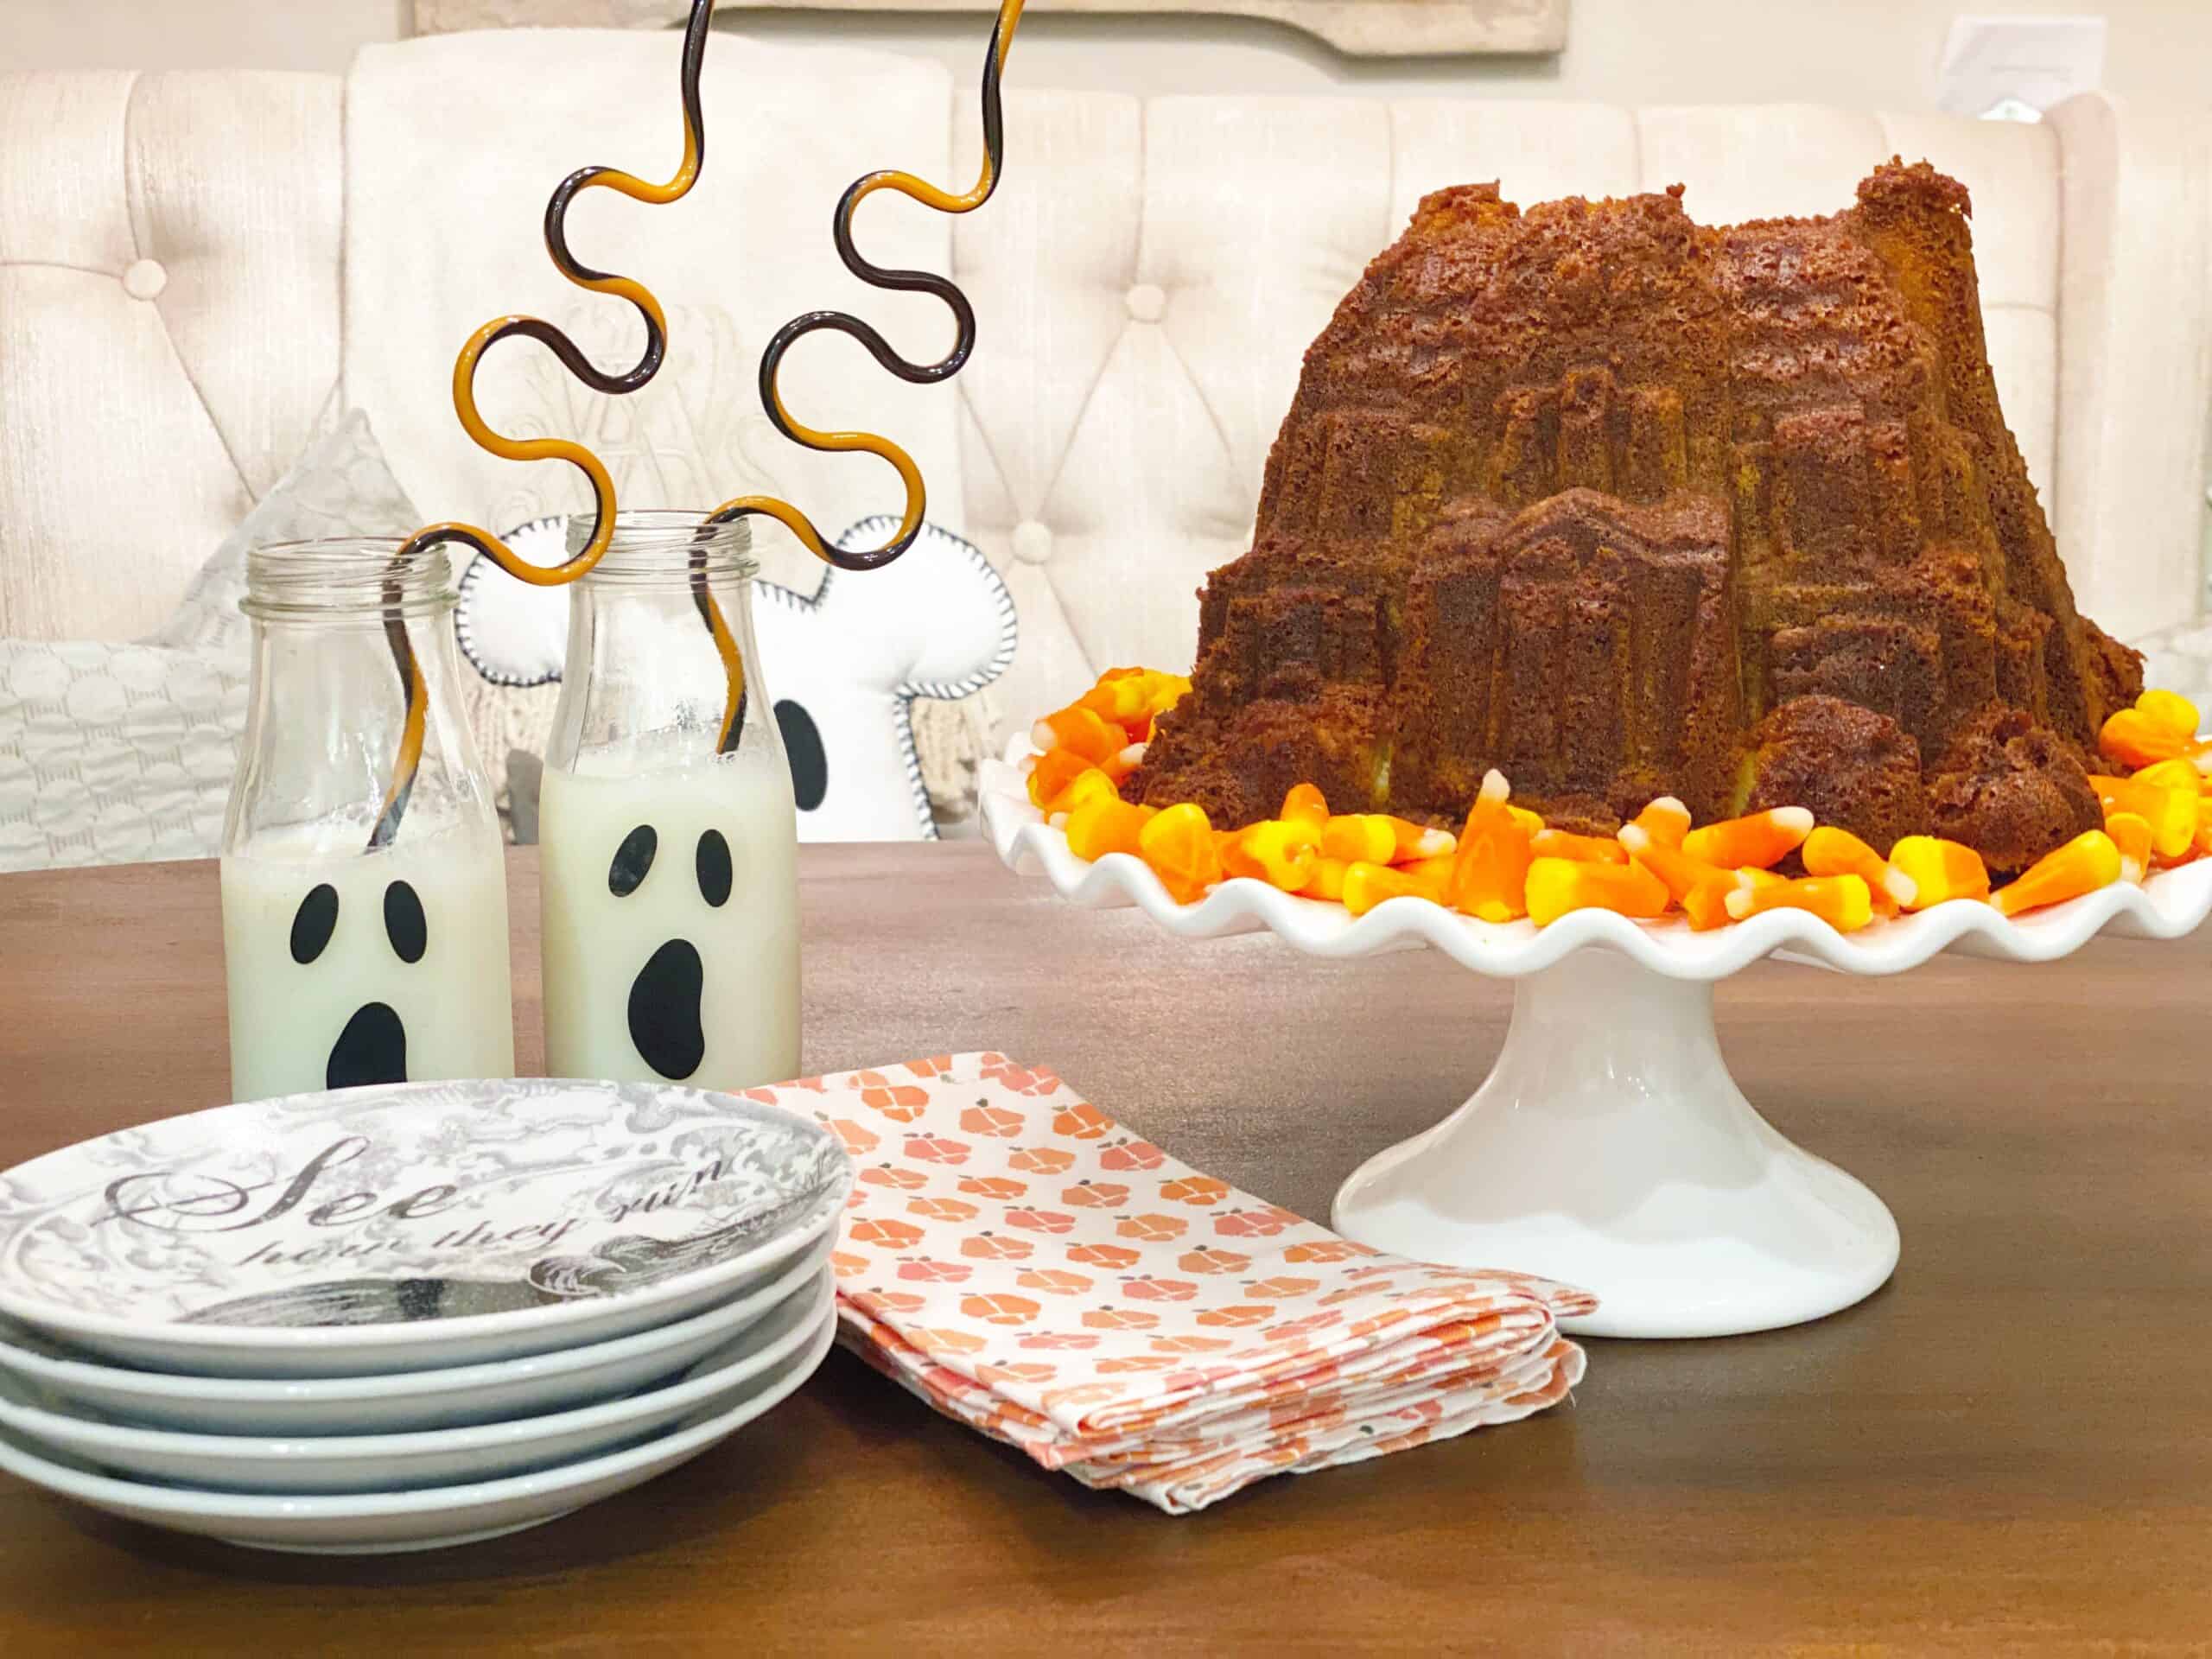 Halloween Haunted House Bundt Cake – Dixie Delights